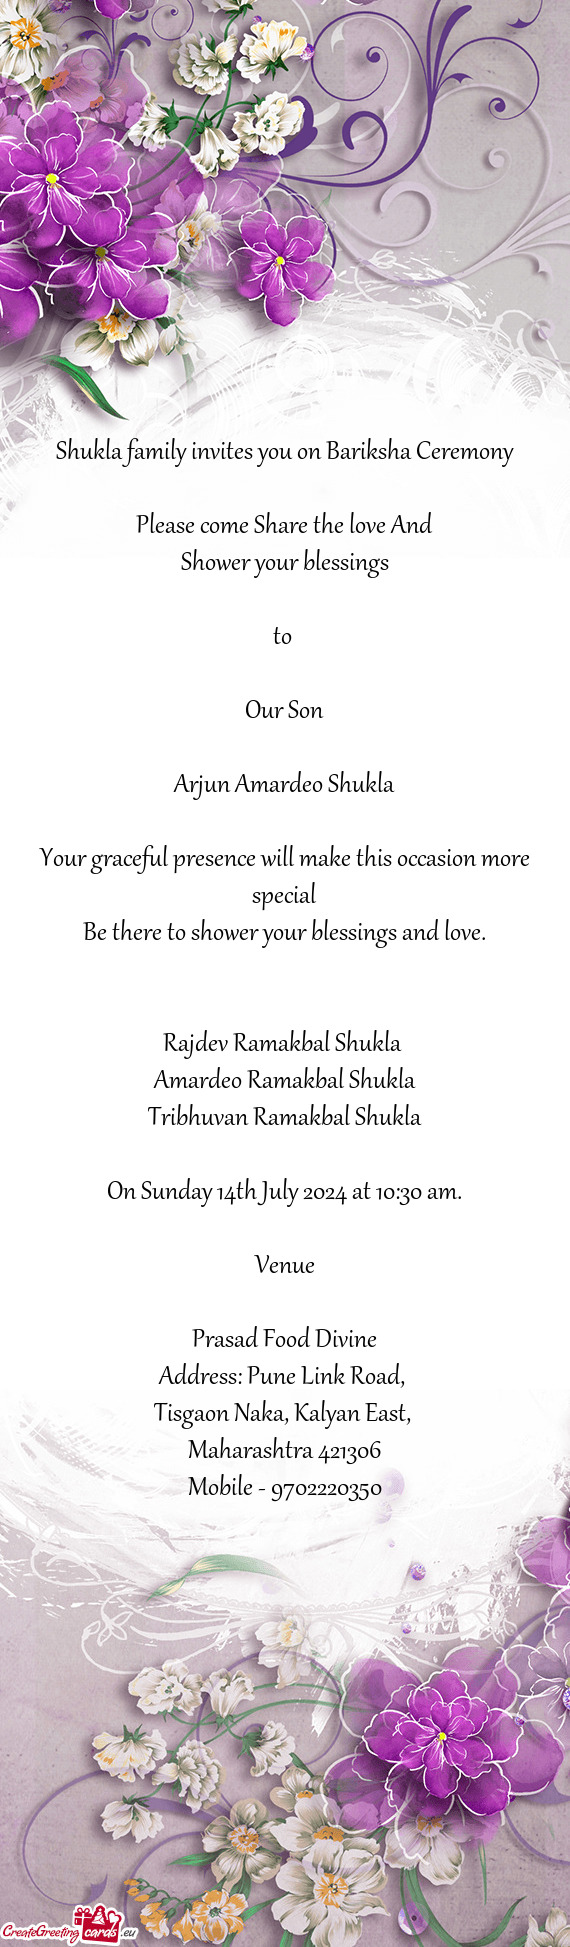 Shukla family invites you on Bariksha Ceremony